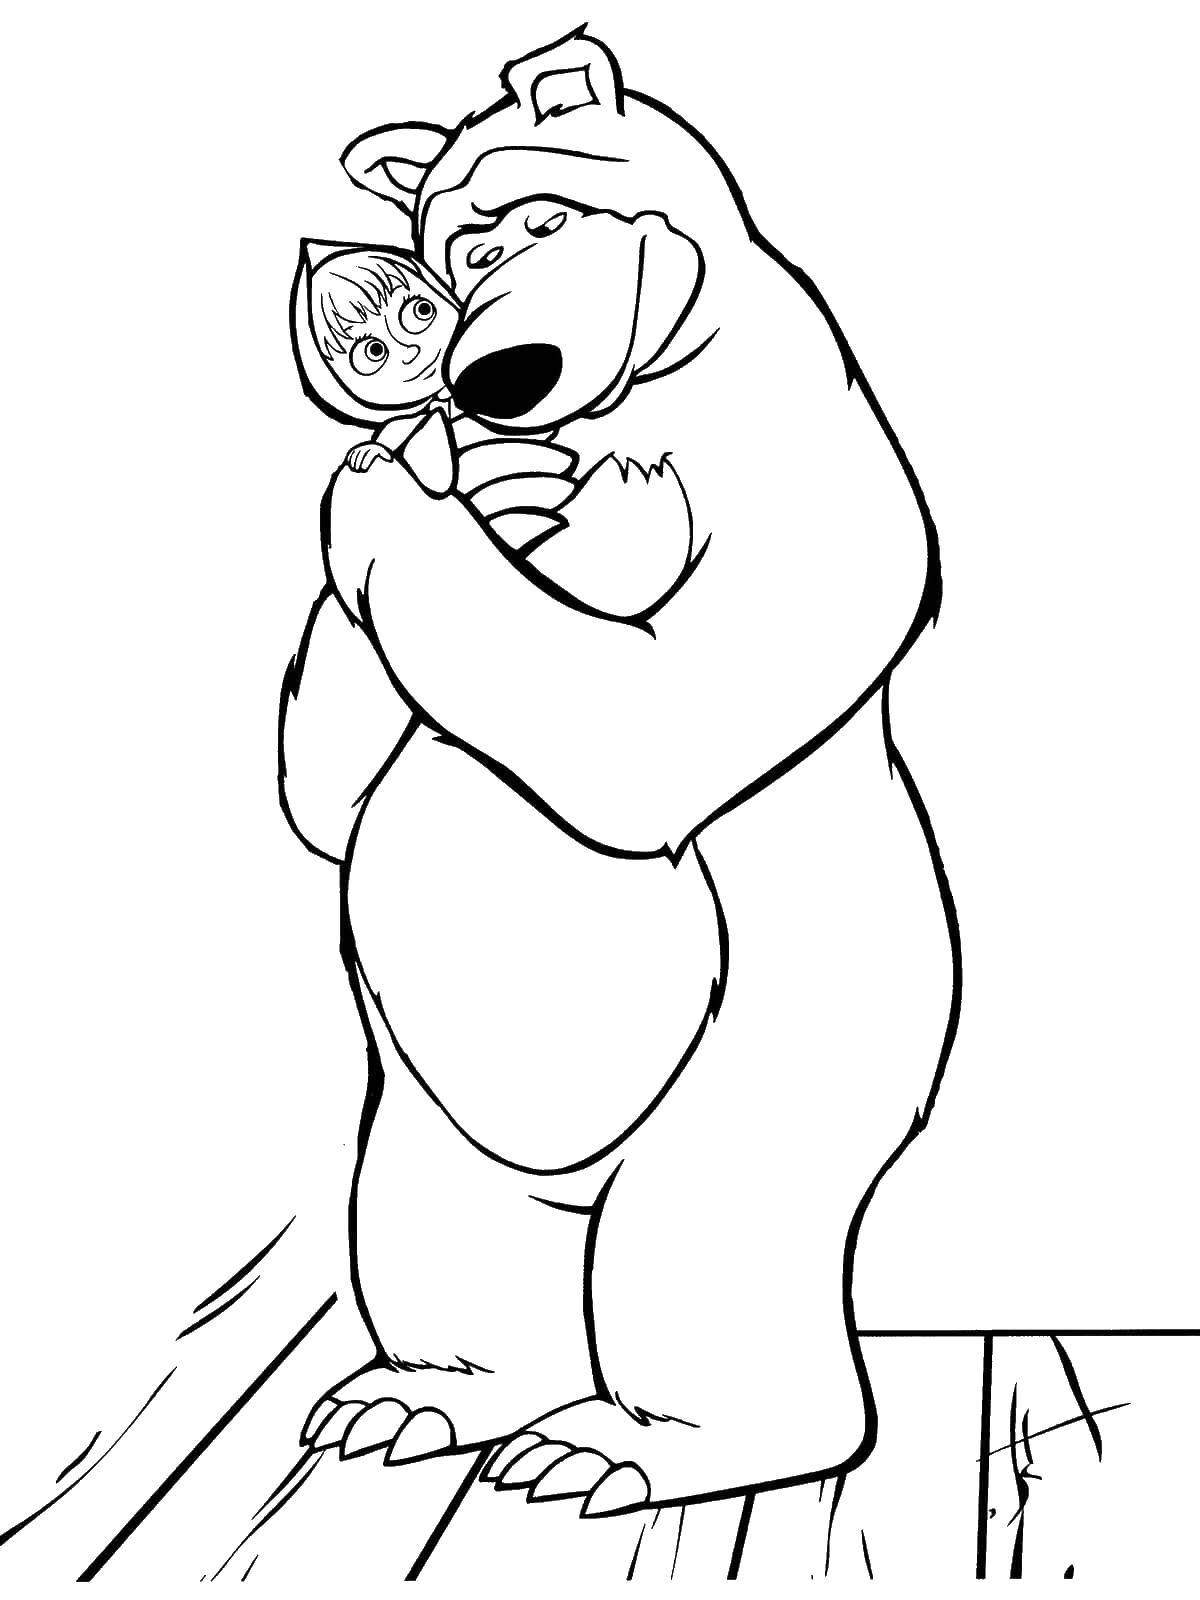 Название: Раскраска Миша обнимает машу. Категория: маша и медведь. Теги: Маша, Медведь.